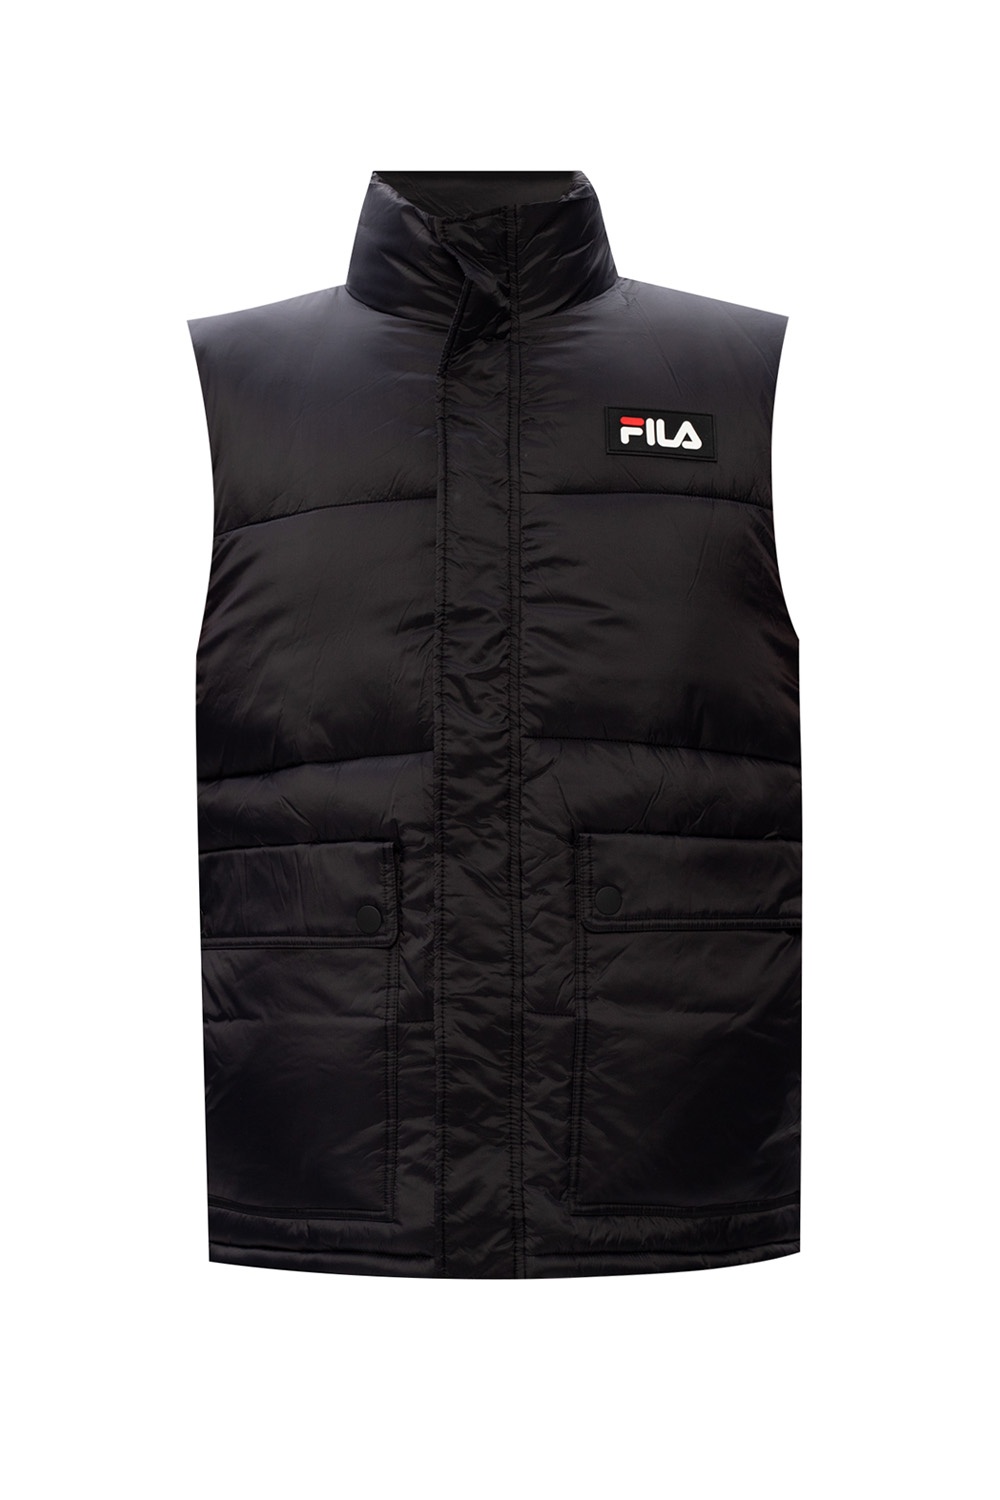 Estereotipo Penetrar Mirar furtivamente Fila Quilted vest with logo | Men's Clothing | Vitkac